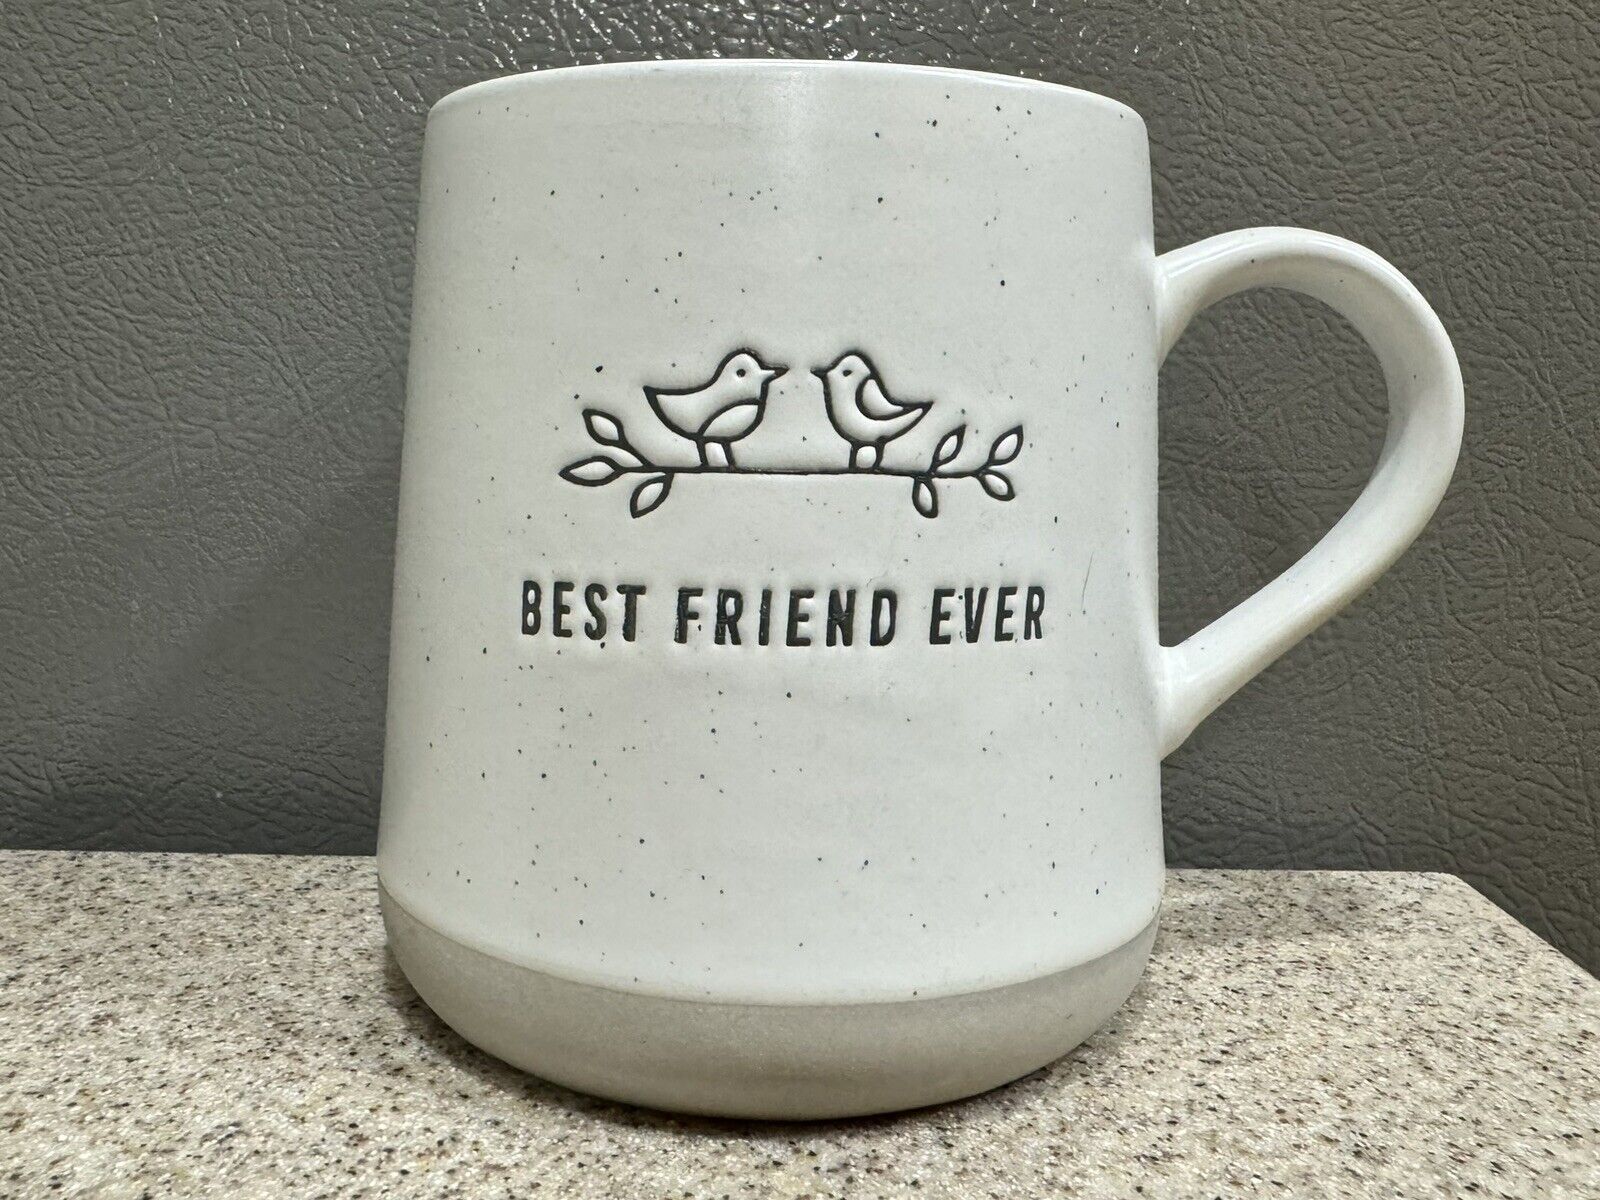 Sheffield Home Ceramic 4.5” Coffee Mug “Best Friend Ever” Birds Impressed in EUC